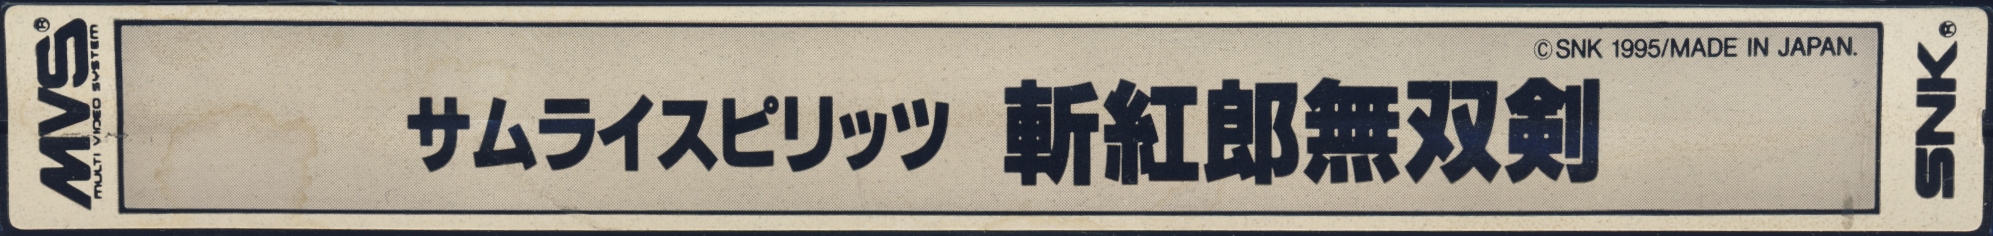 Samurai shodown iii jp label.jpg